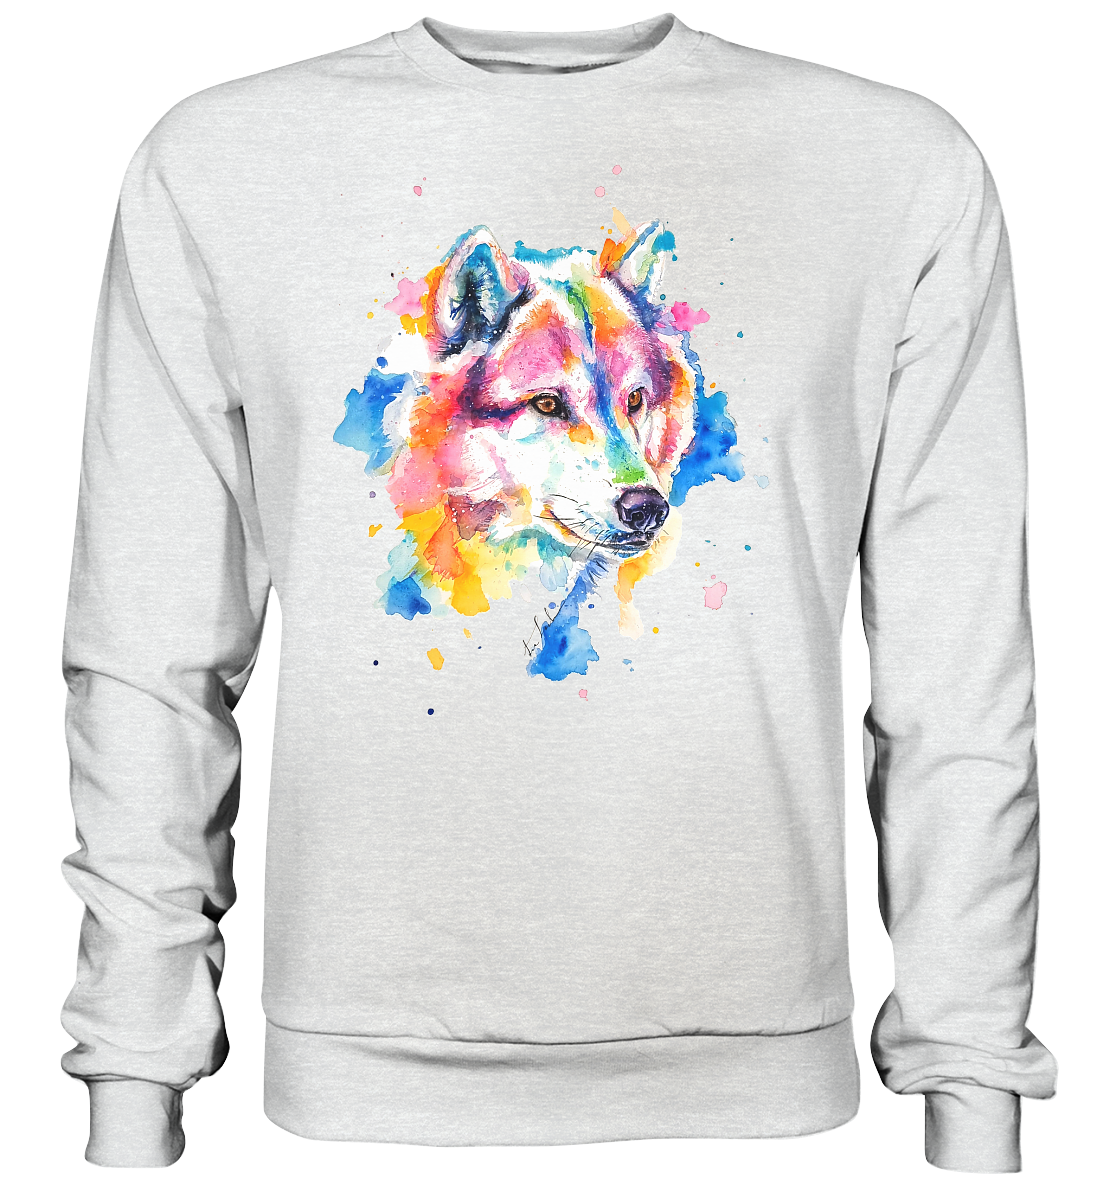 Bunter Wolf - Premium Sweatshirt